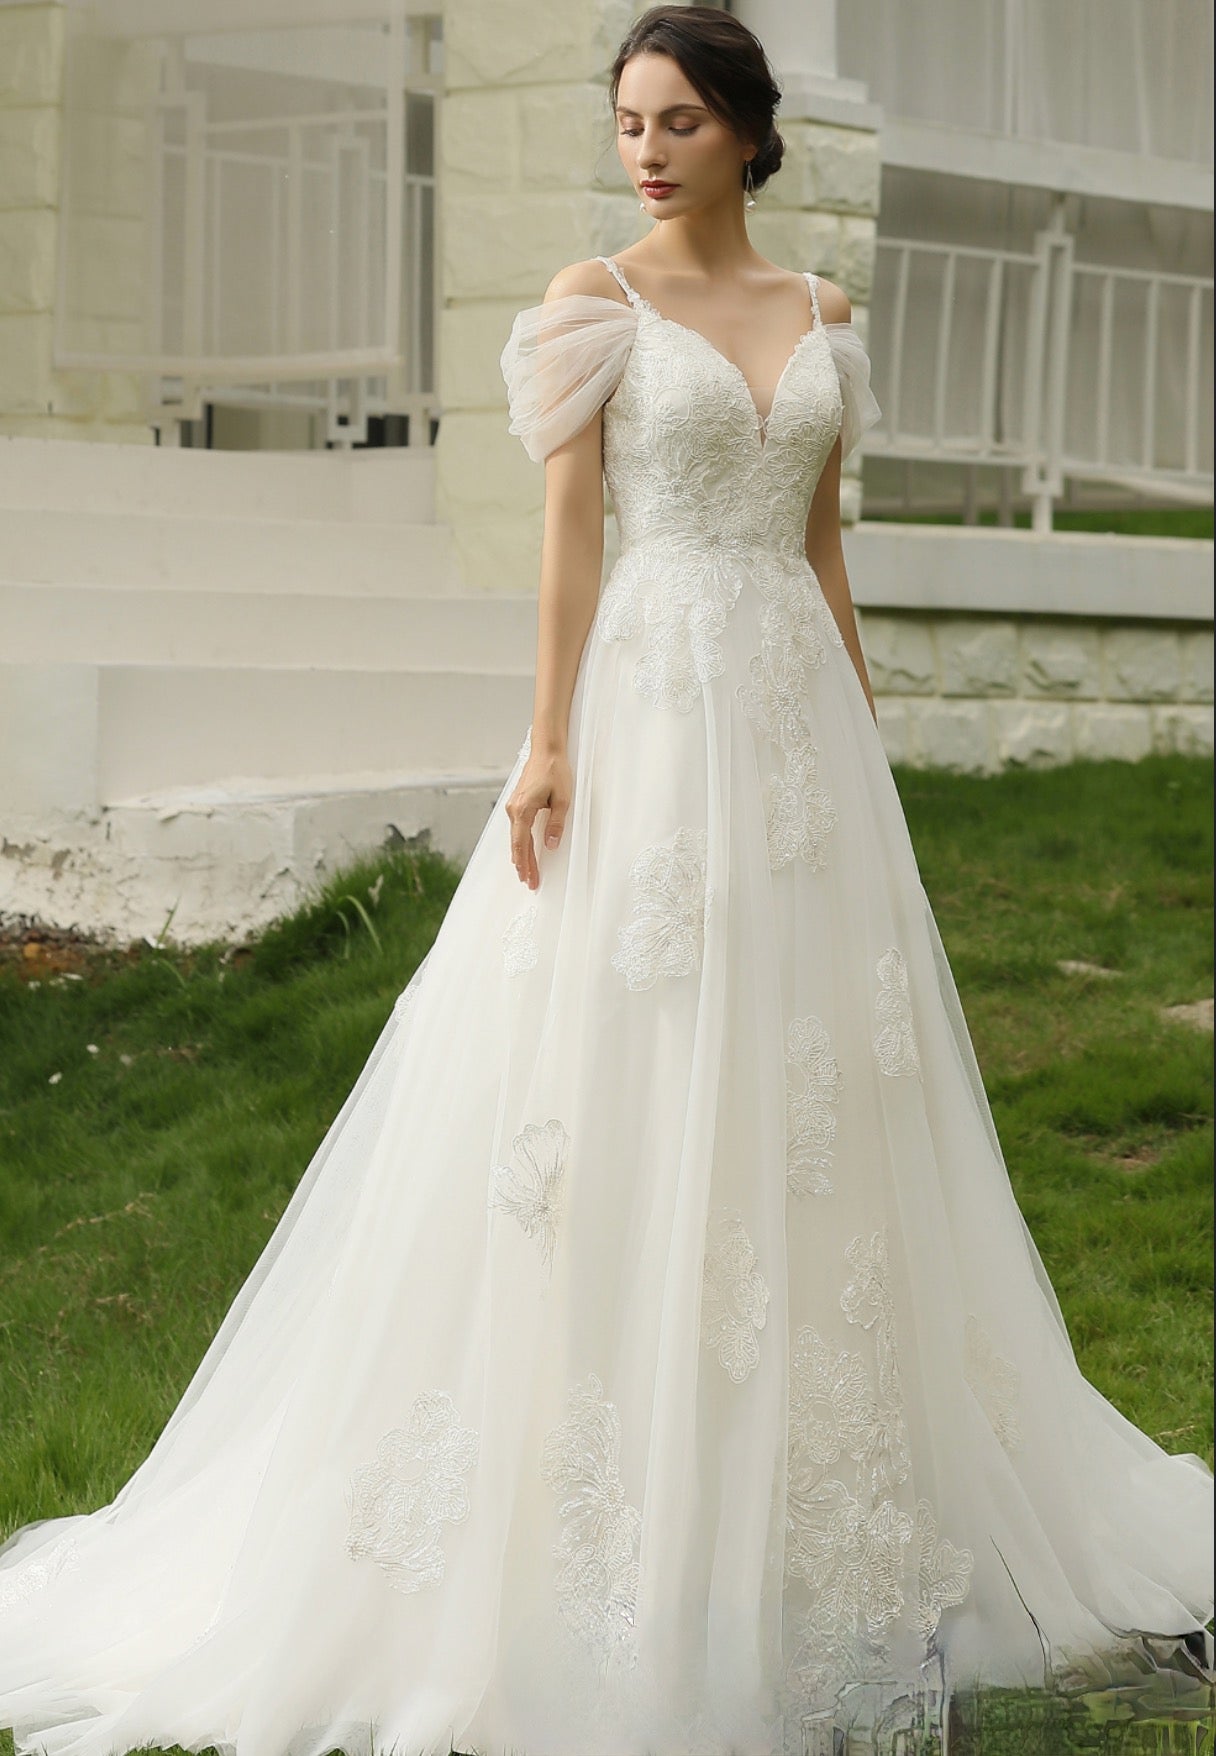 Plunging V-neck with Detachable Overskirt Wedding Dress - Xdressy